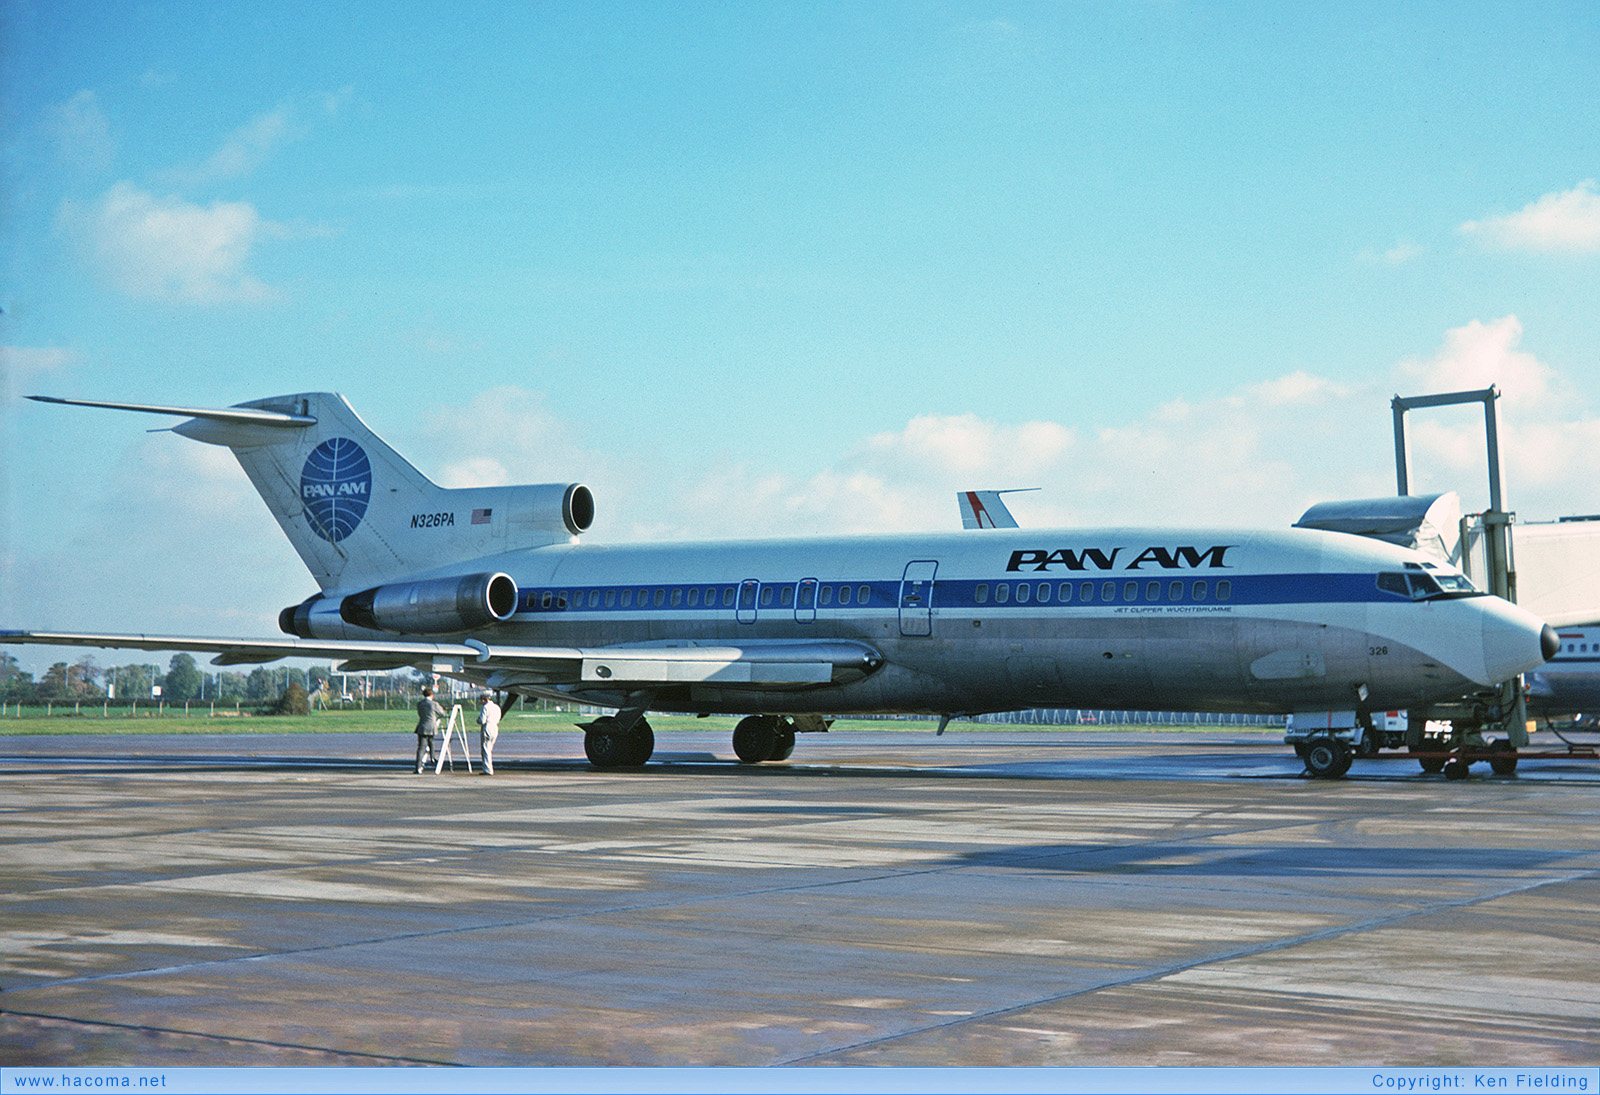 Foto von N326PA - Pan Am Clipper Muenchen / DeSoto / Nuremberg / White Falcon / Raven / Berolina / Wuchtbrumme - Manchester Airport - 24.10.1975